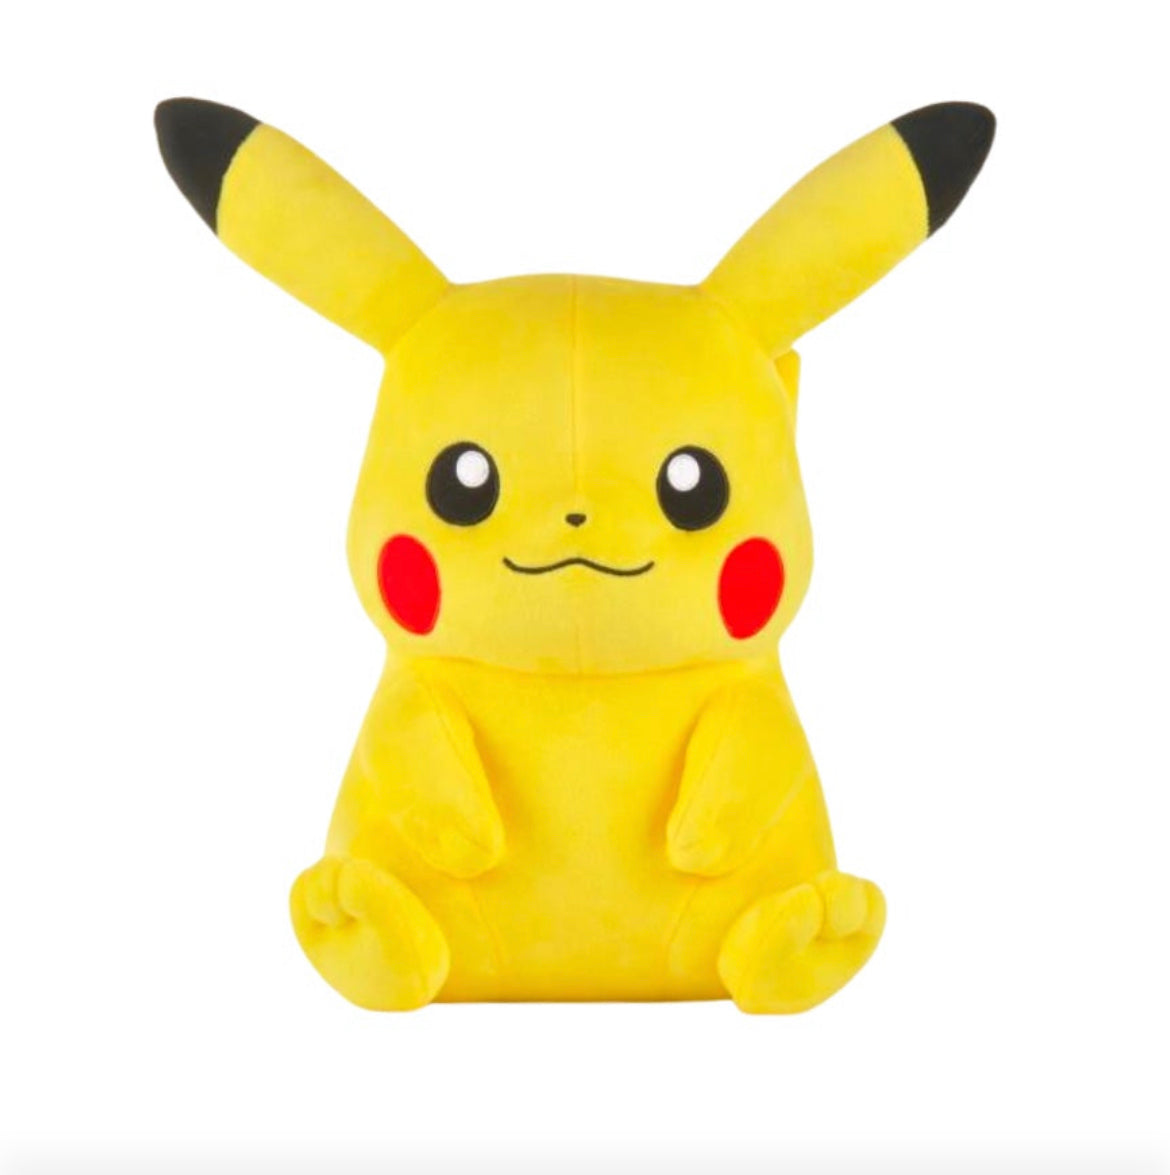 Peluche Pikachu Pokémon